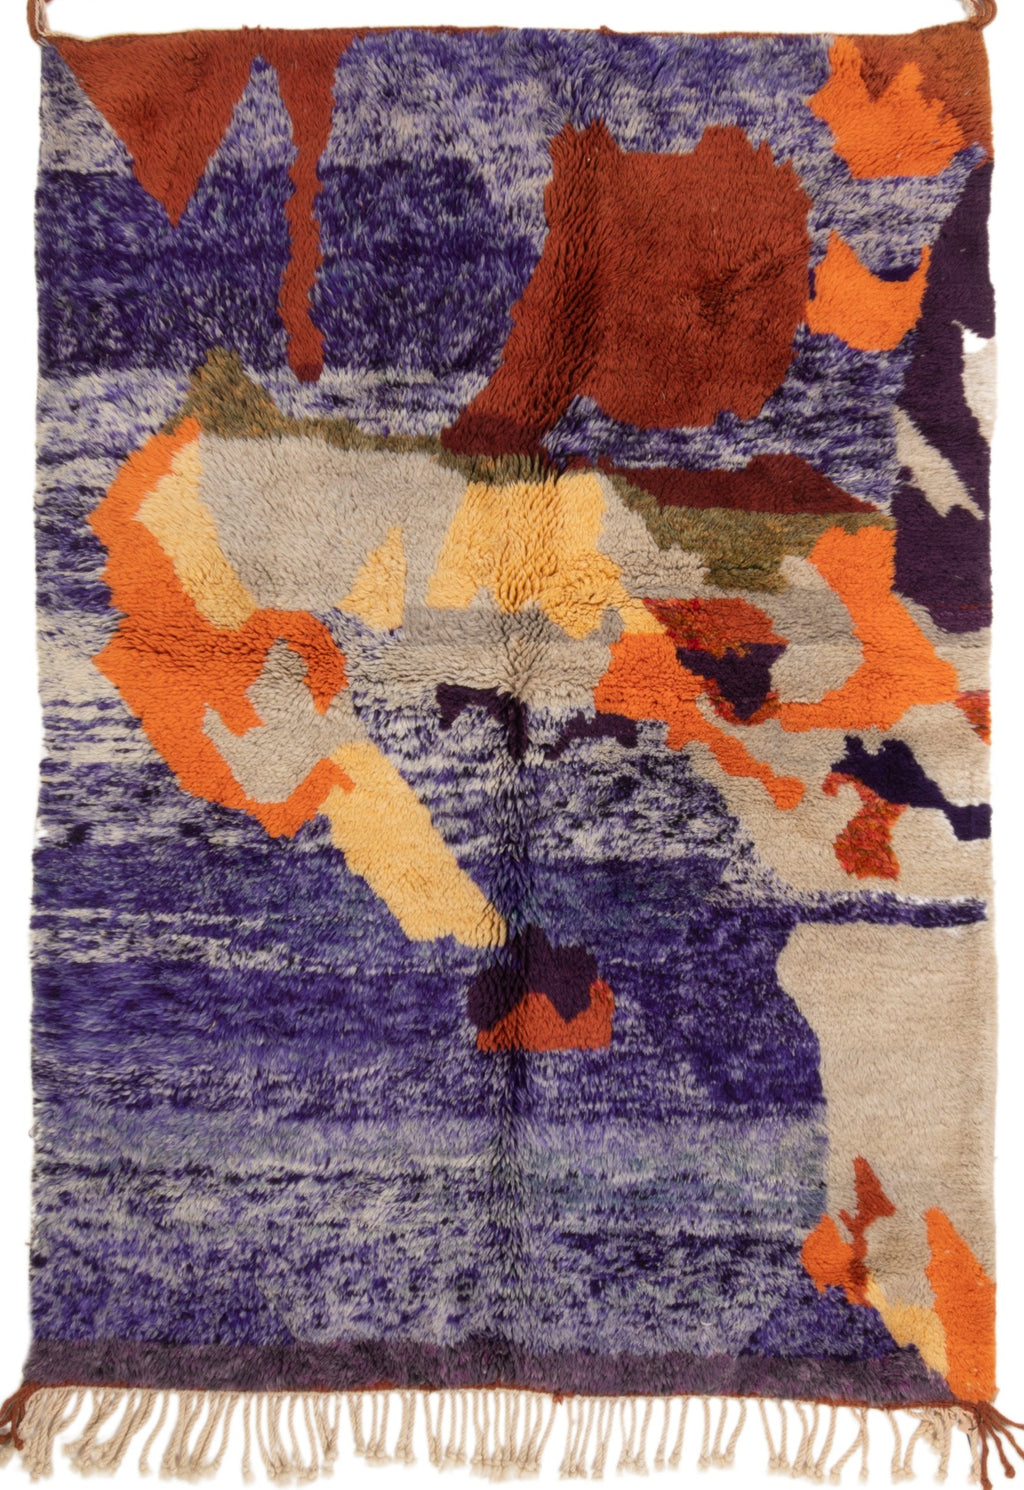 Abstract shape rug